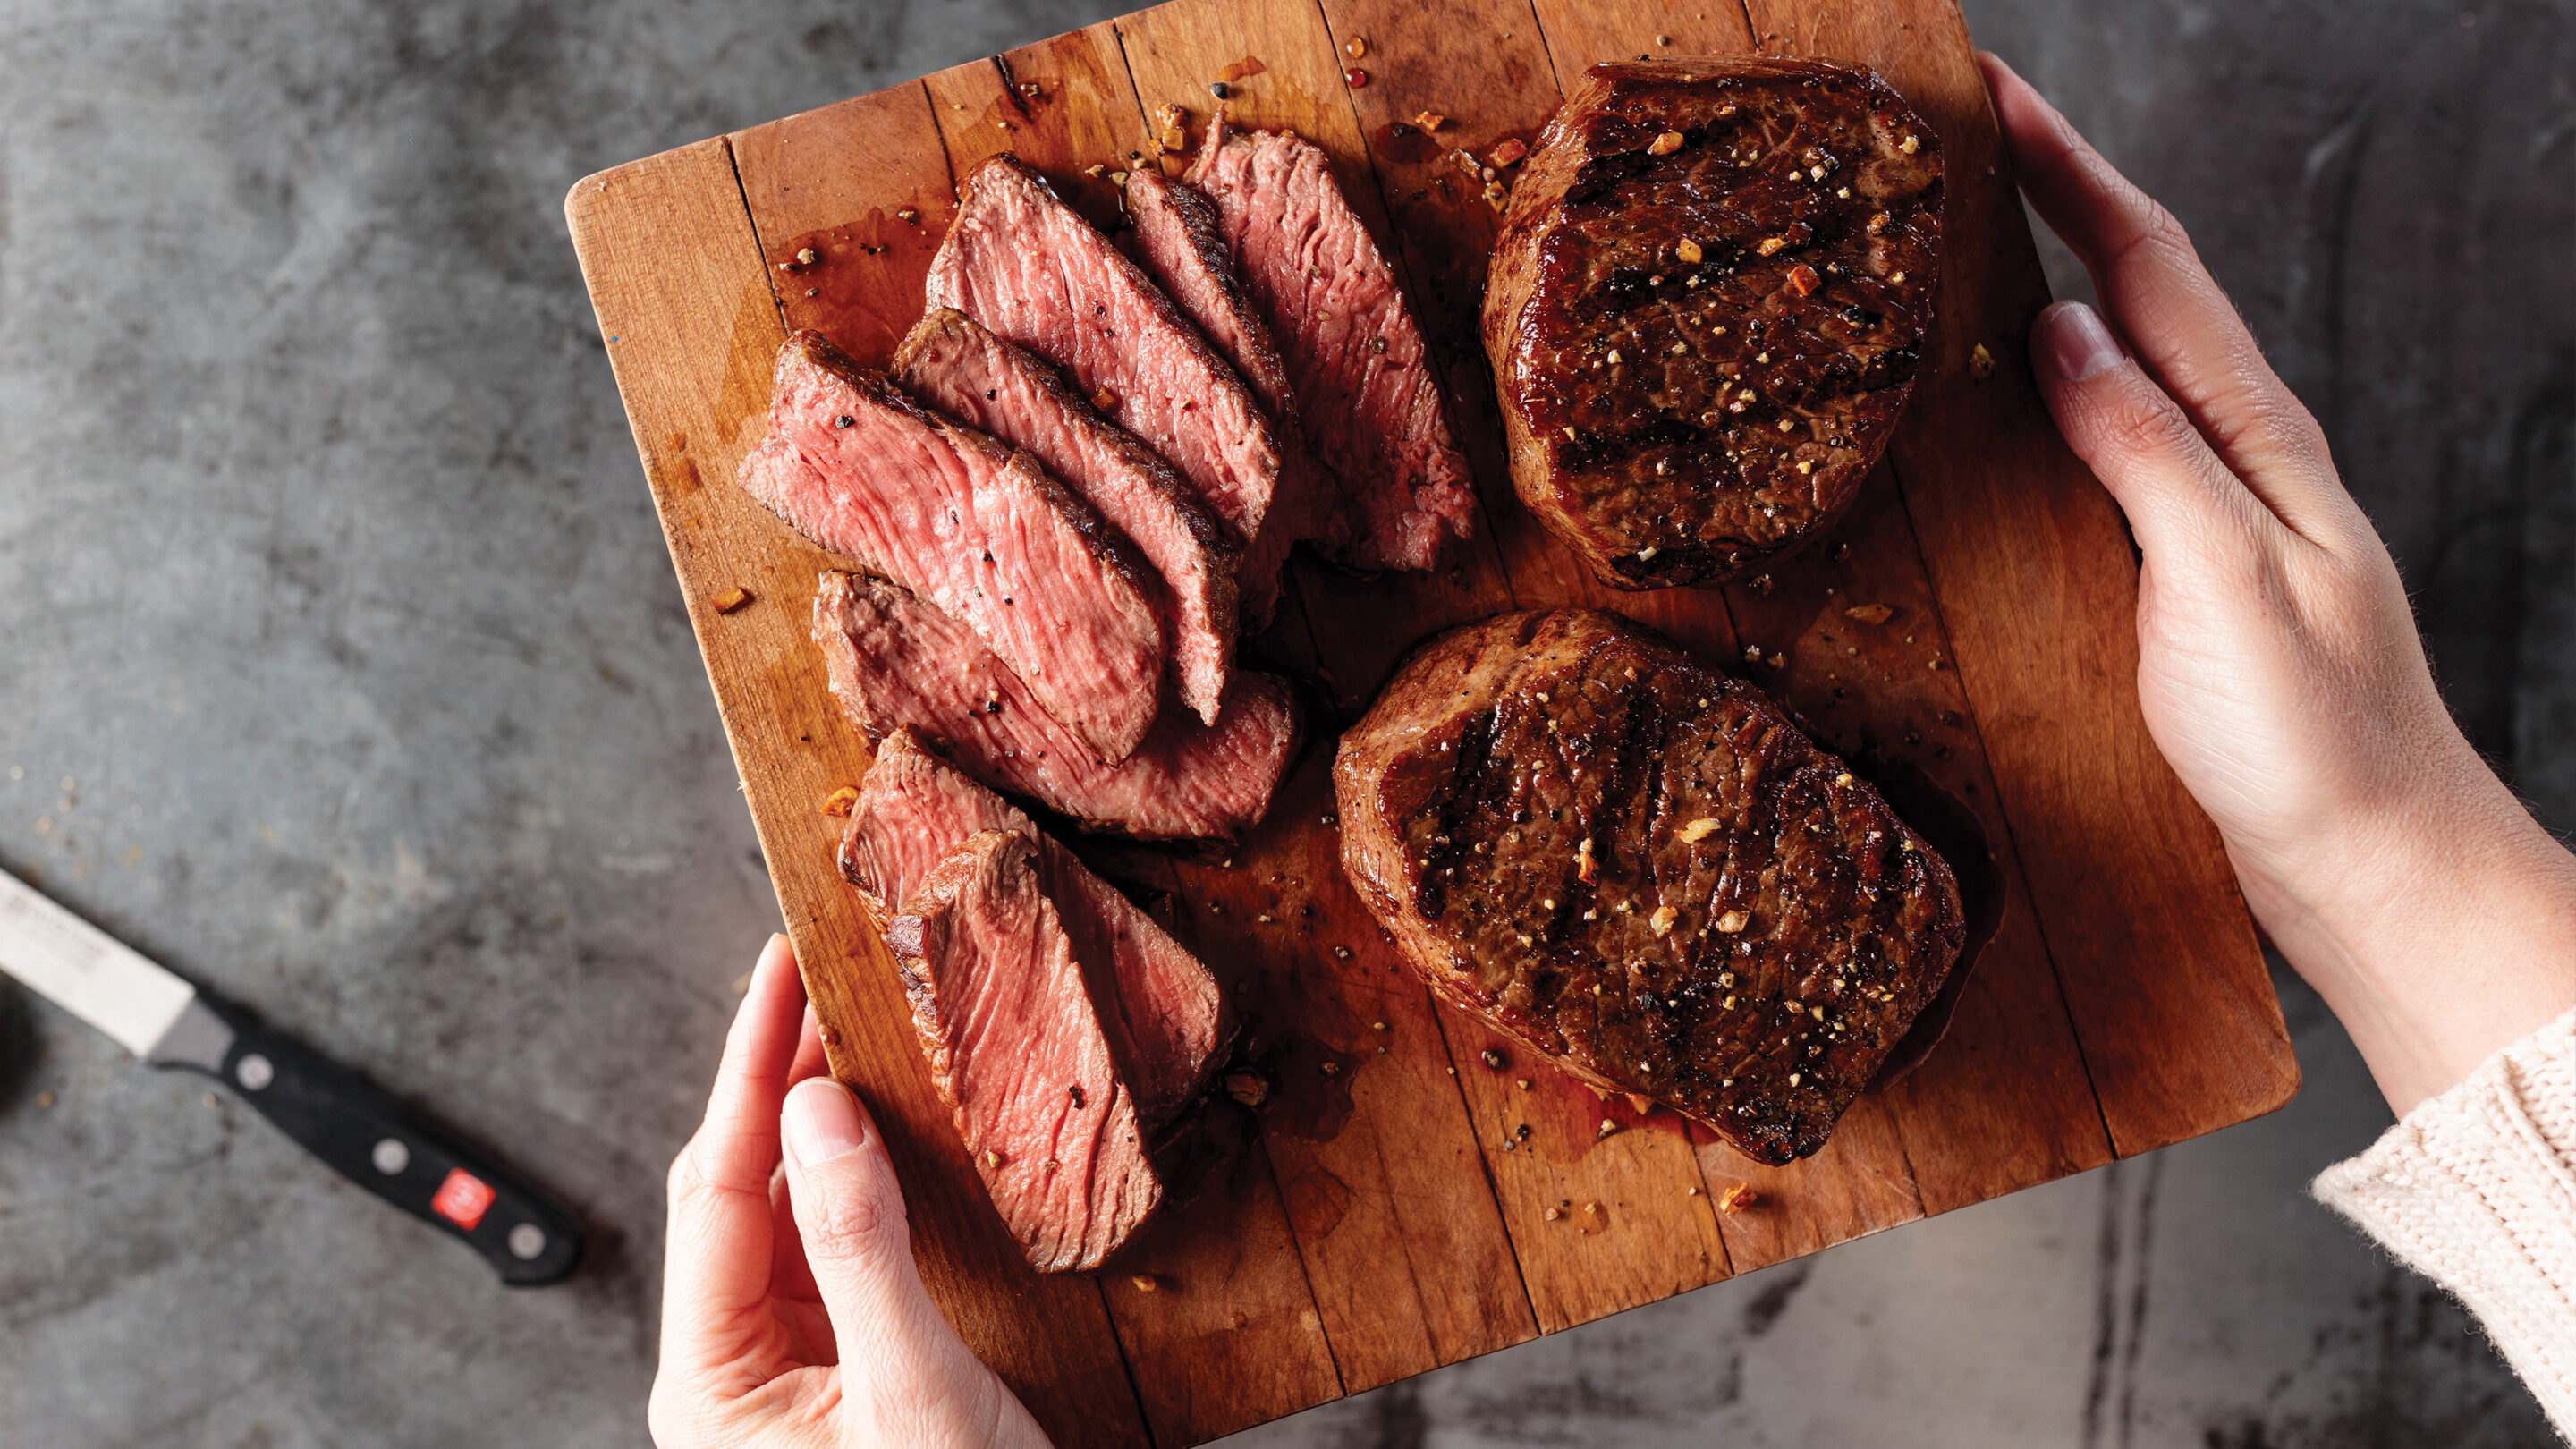 Ribeye Steak in the Oven - Savor the Best